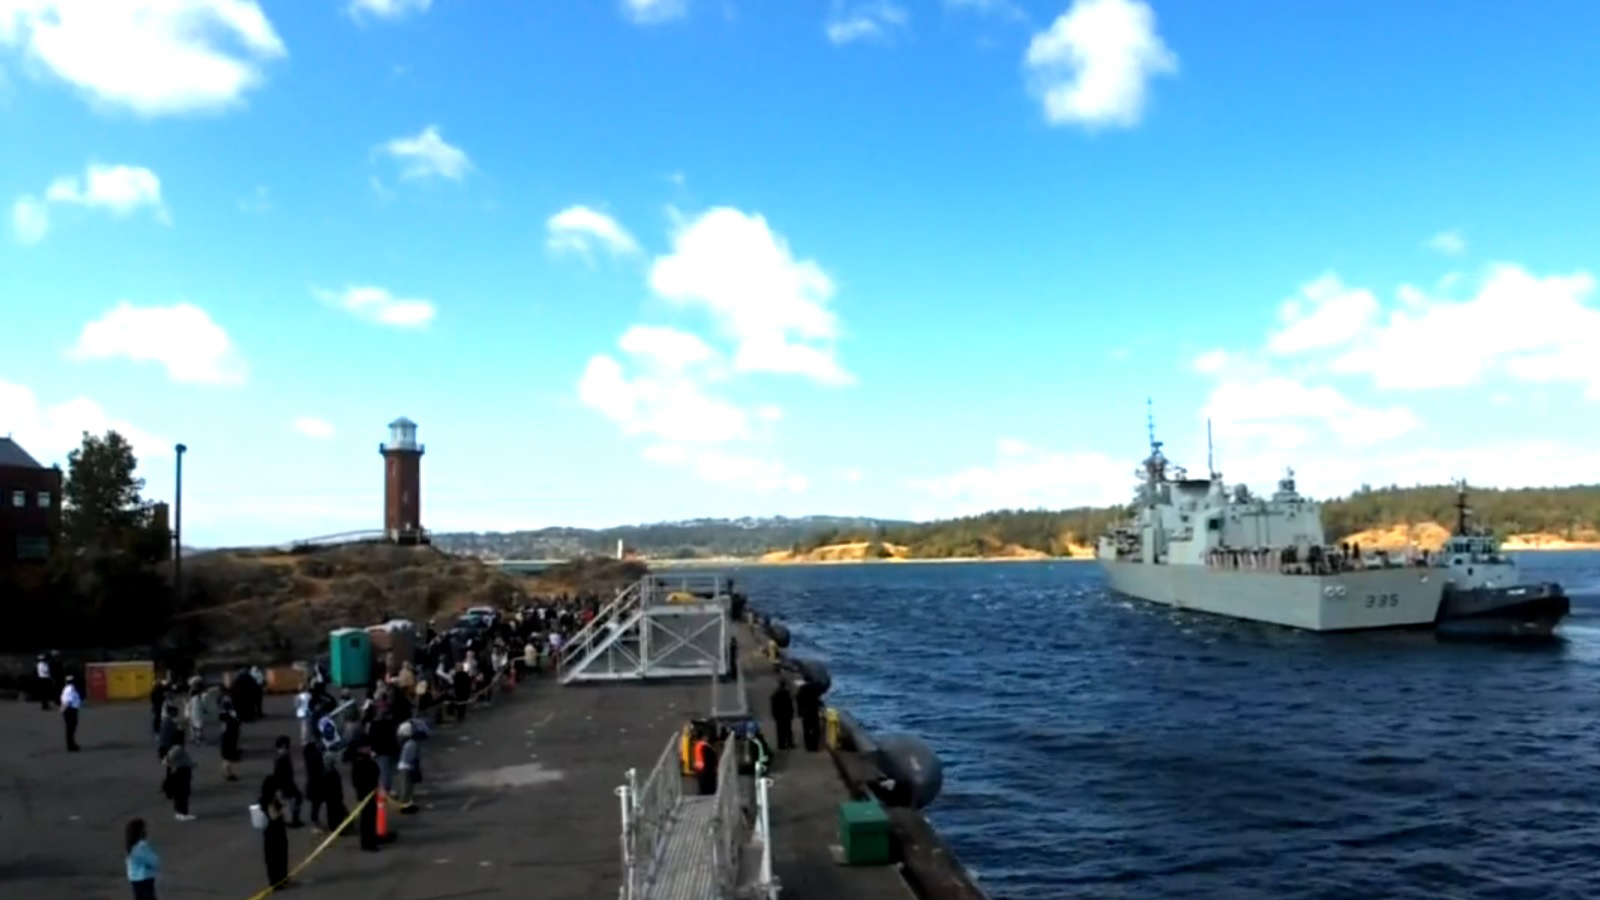 Slide - Homecoming ceremony for HMCS Calgary